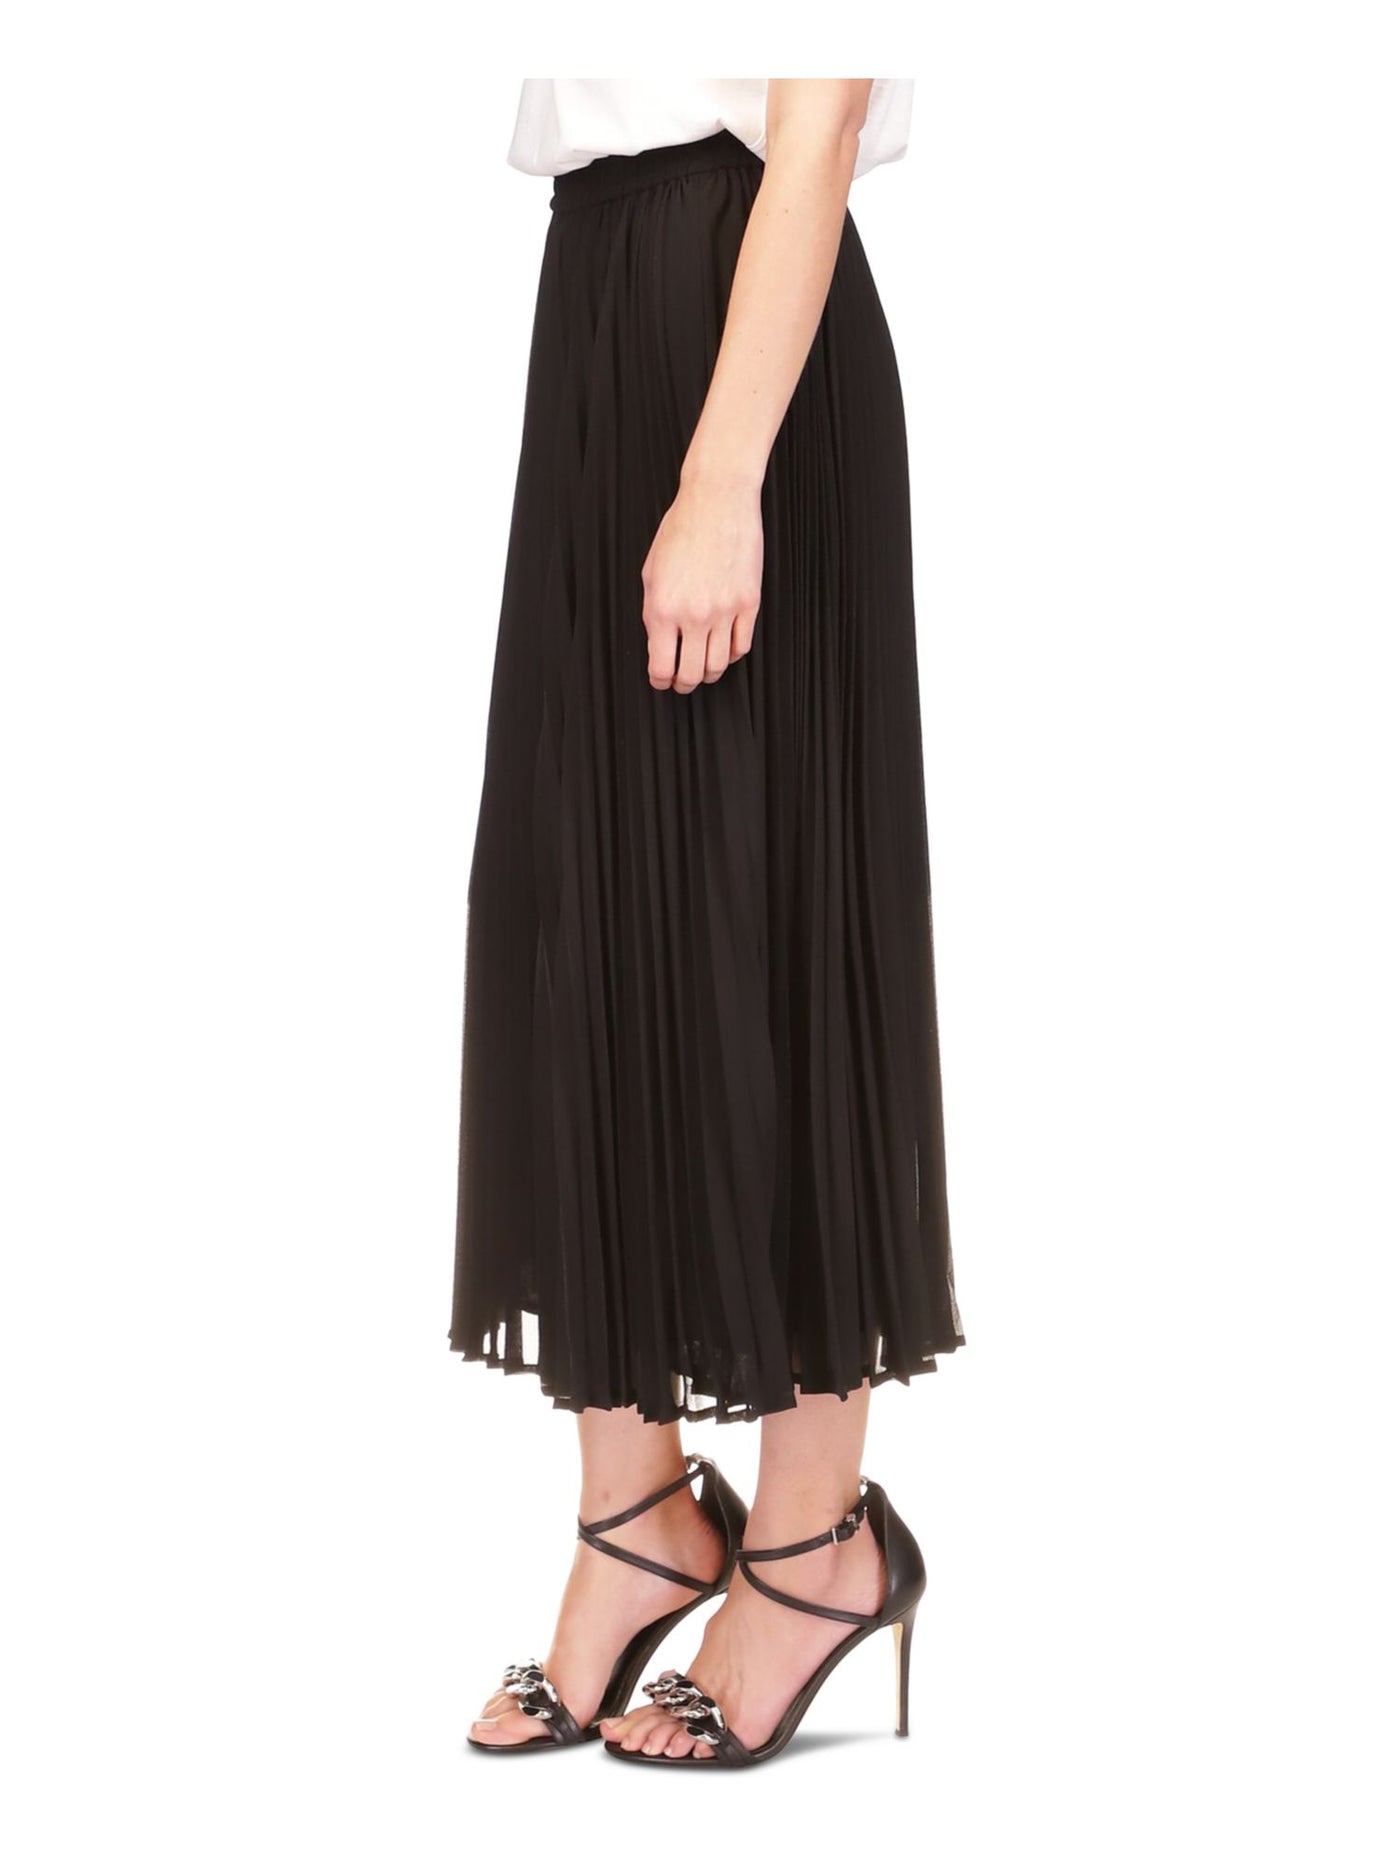 MICHAEL MICHAEL KORS Womens Black Lined Elastic Waist Pull-on Midi Wear To Work Pleated Skirt L